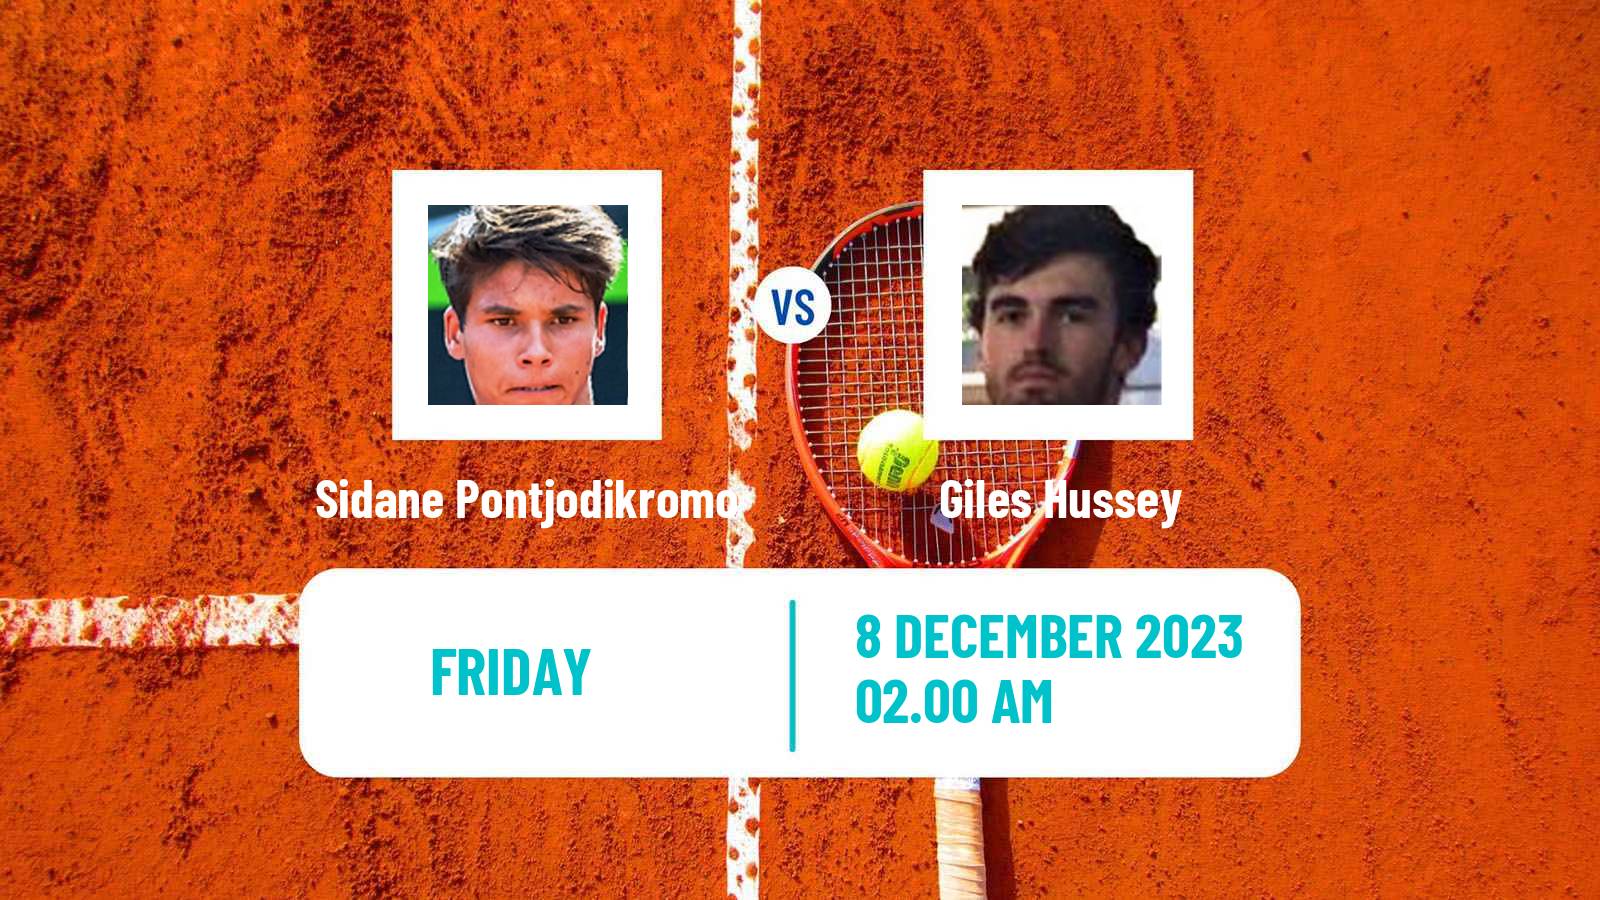 Tennis ITF M15 Zahra 2 Men Sidane Pontjodikromo - Giles Hussey